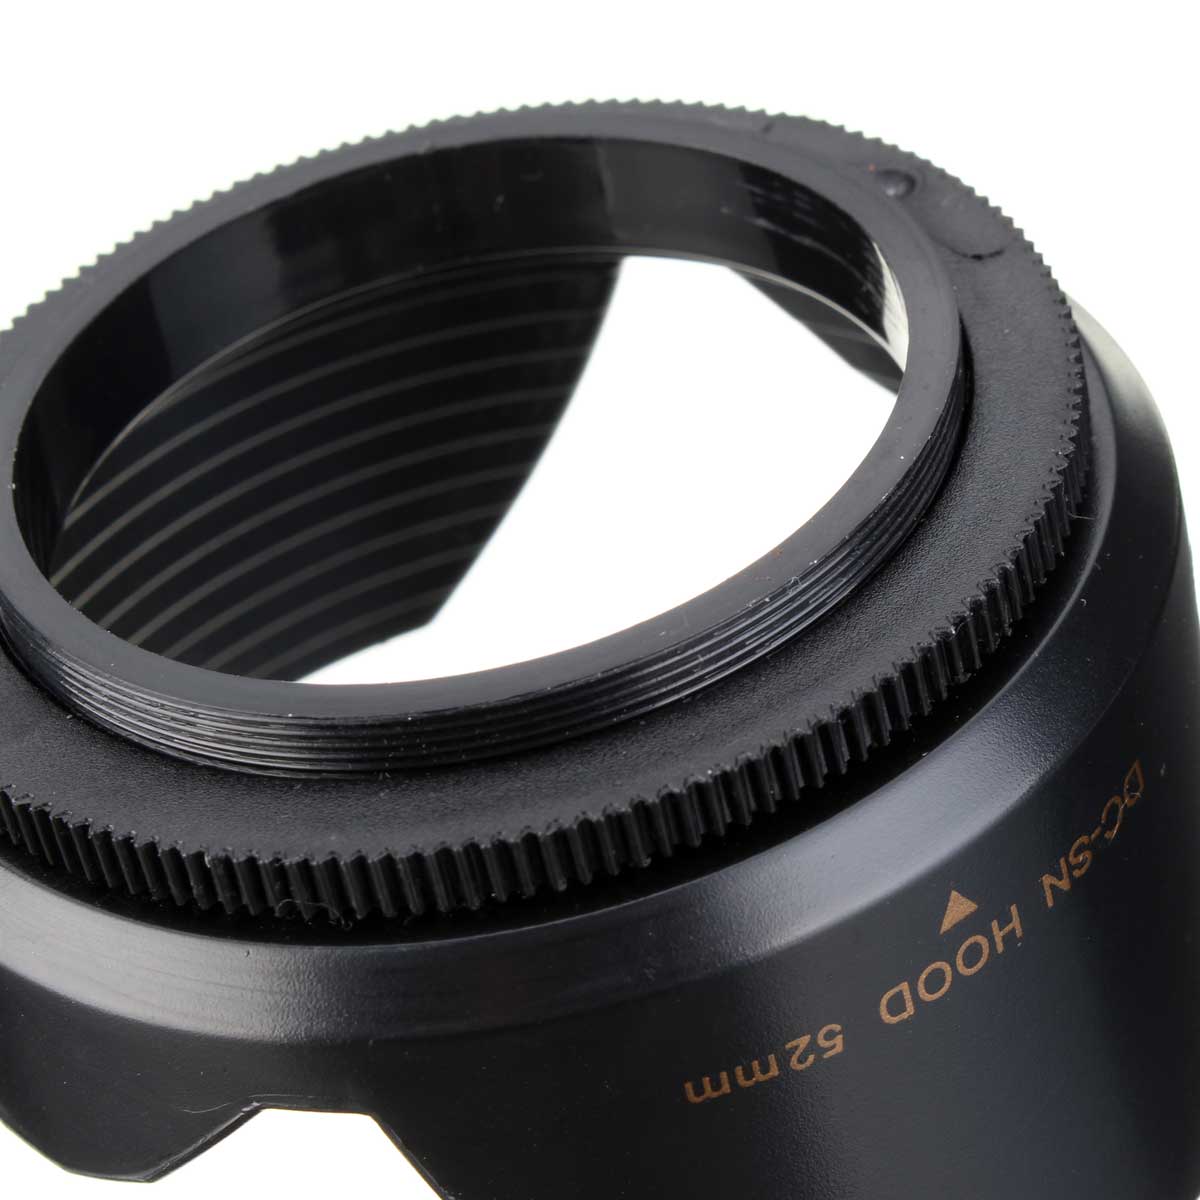 52mm-Flower-Lens-Hood-For-Nikon-D5200-D5100-D3100-D3200-D3000-1050569